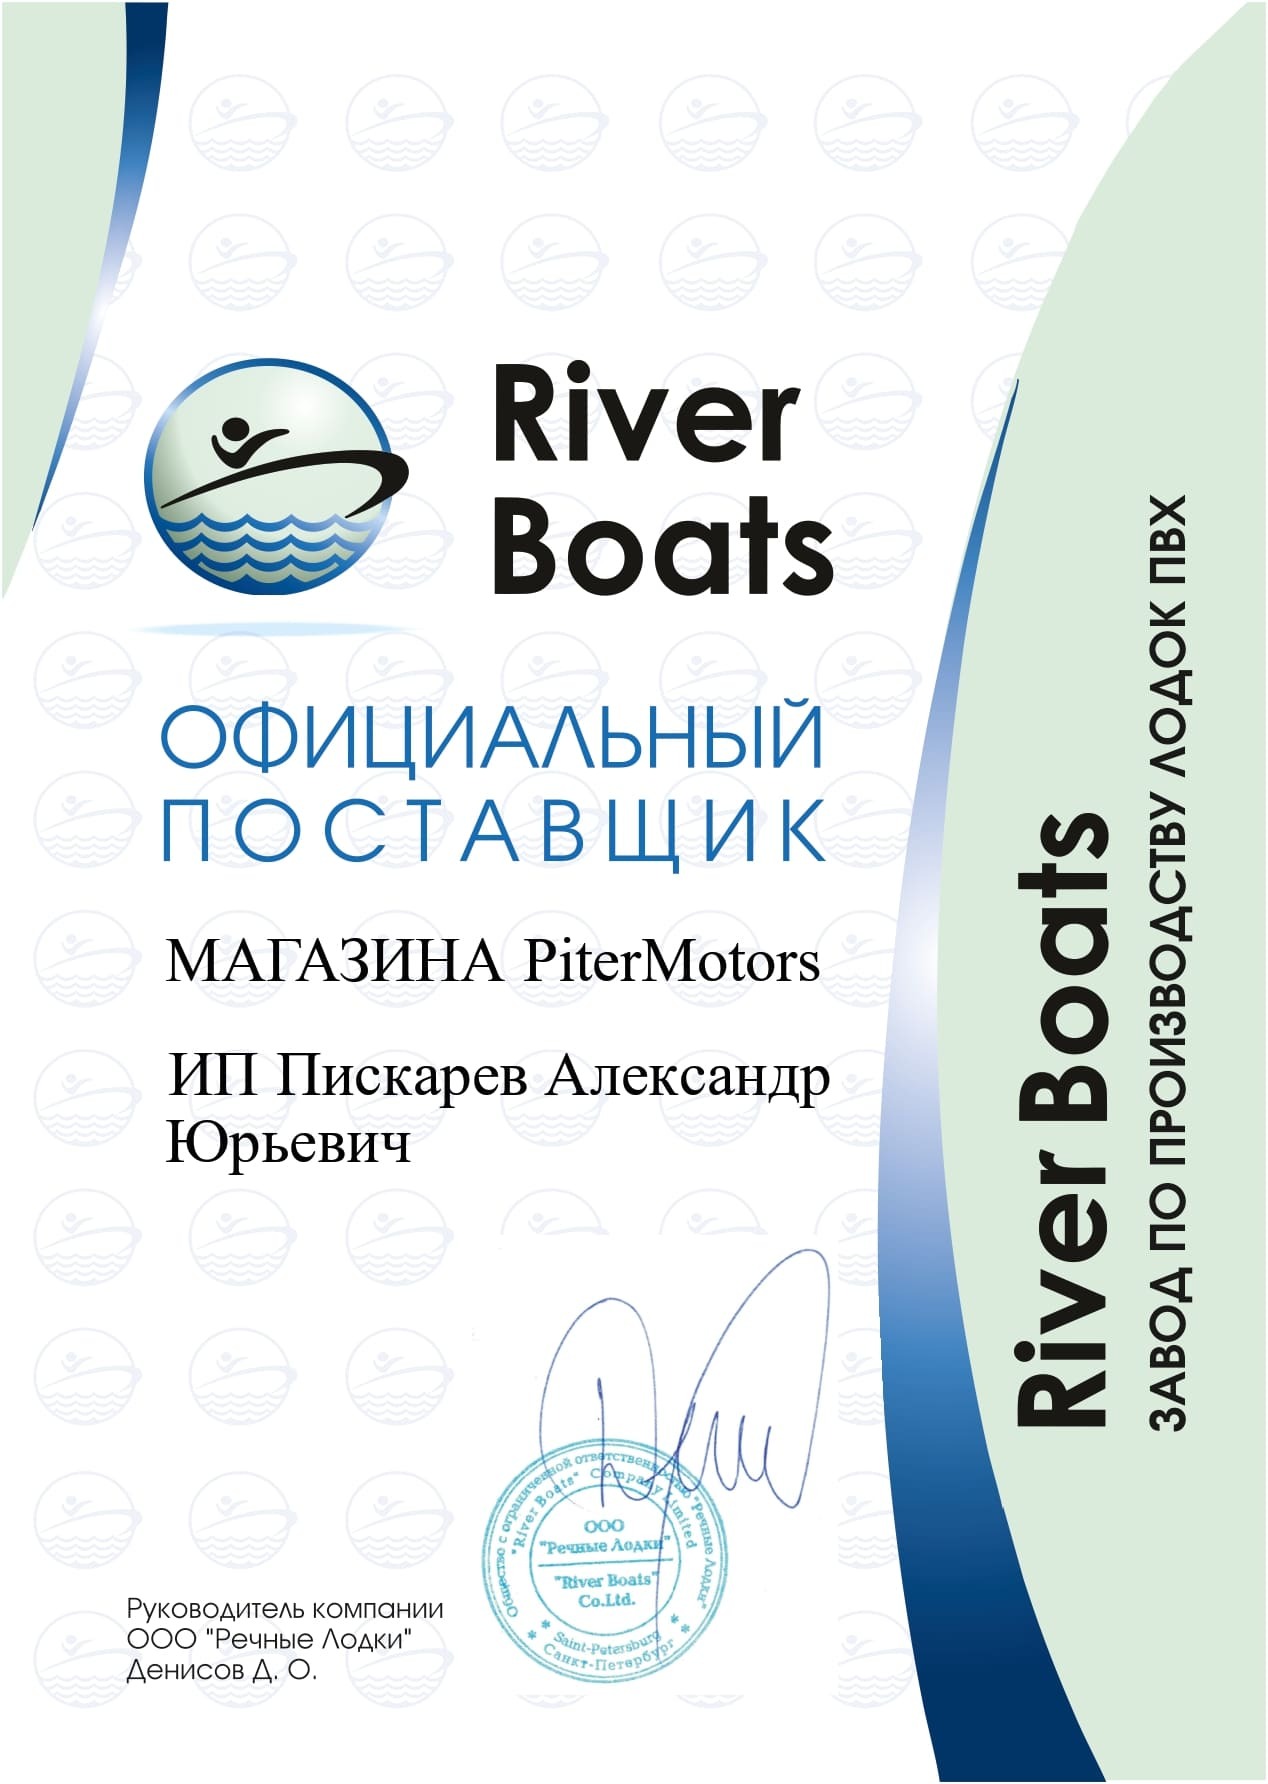 Завод Ривербоатс, Riverboats